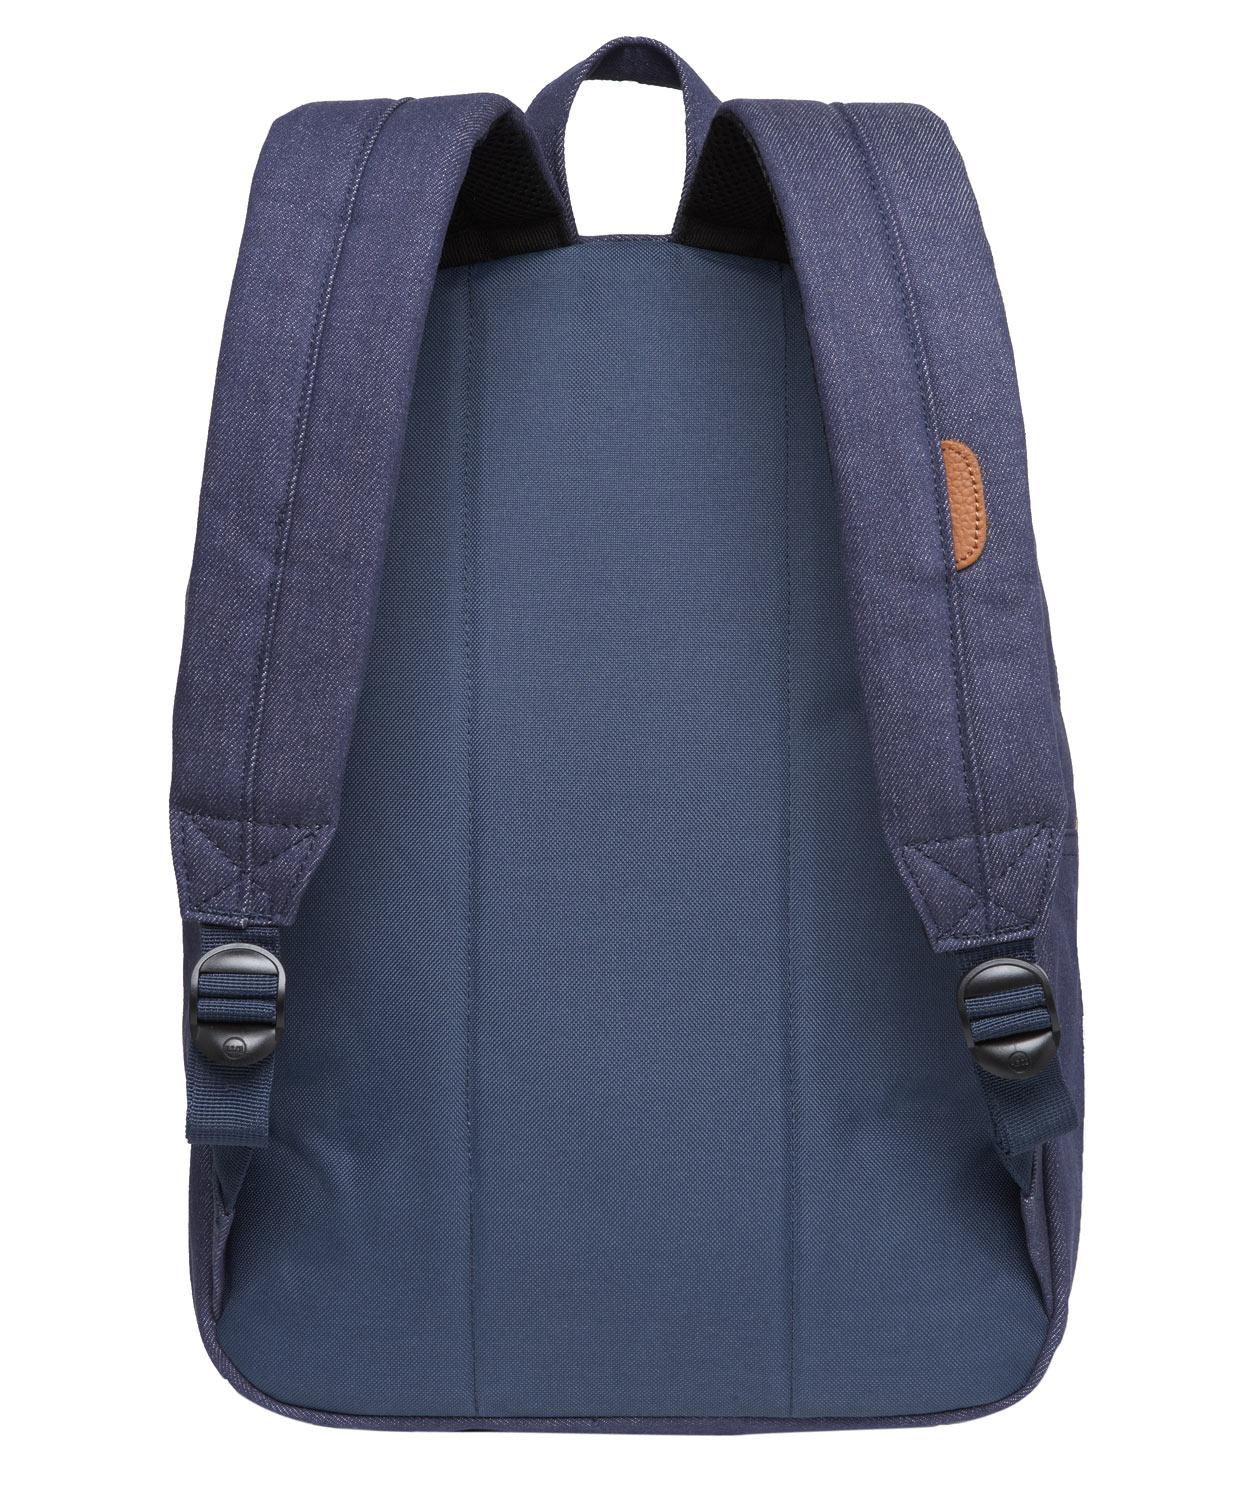 Lyst - Herschel Supply Co. Denim Settlement Backpack in Blue for Men